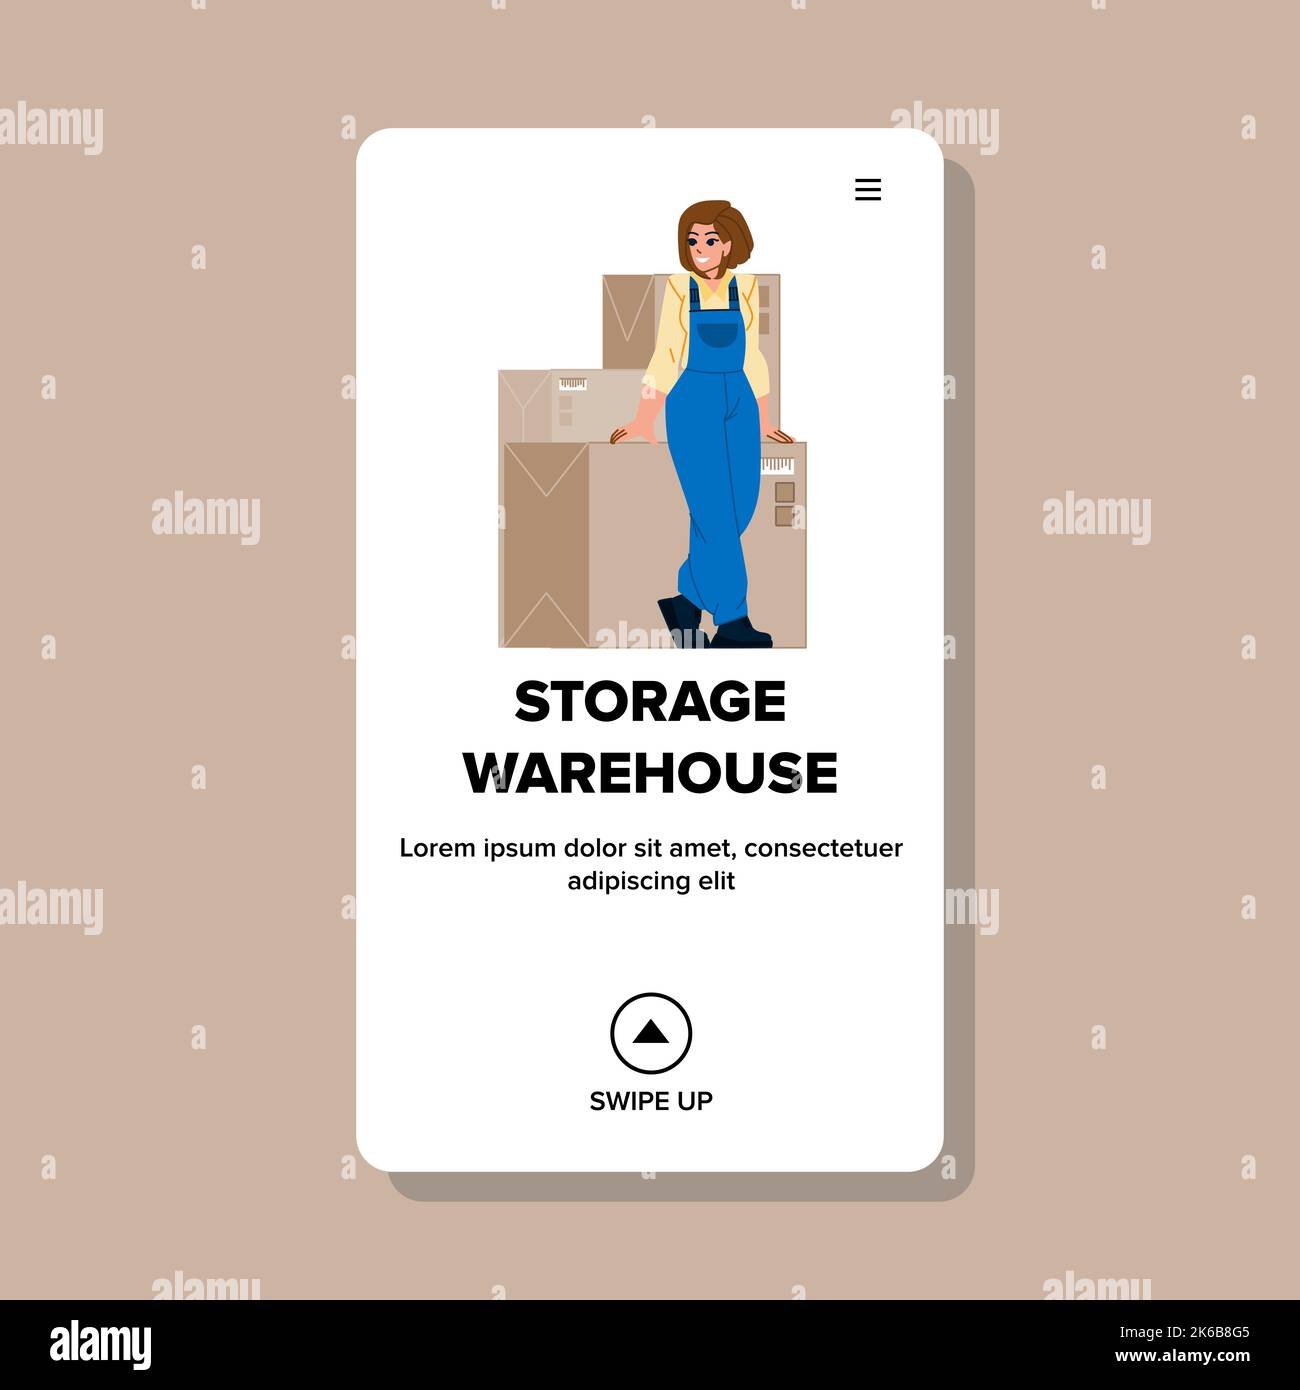 storage warehouse vector Stock Vector